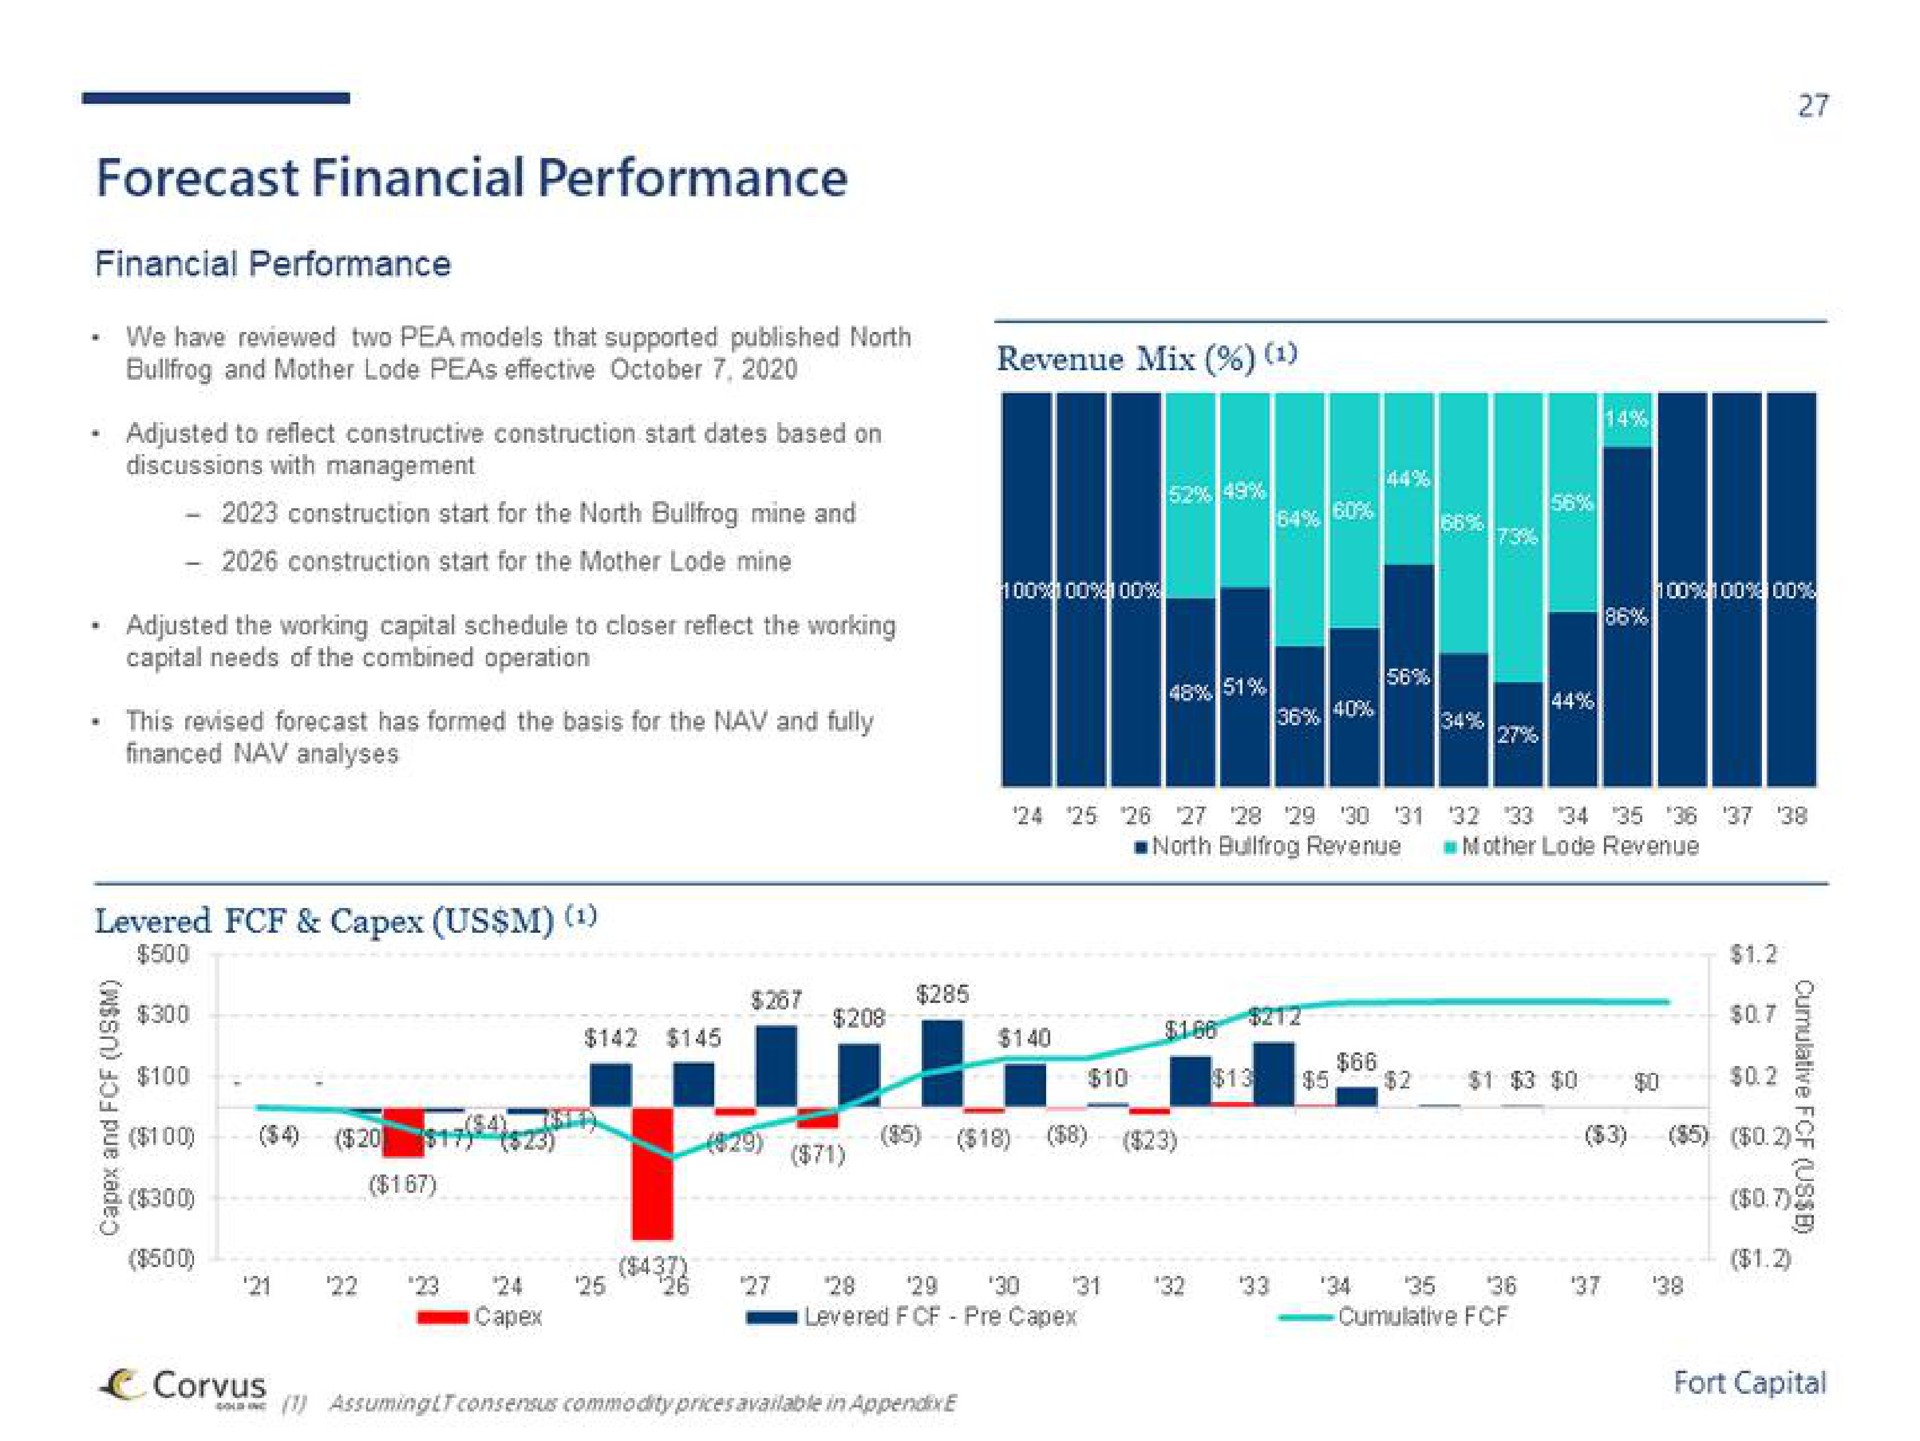 forecast financial performance poe sao go go | Fort Capital